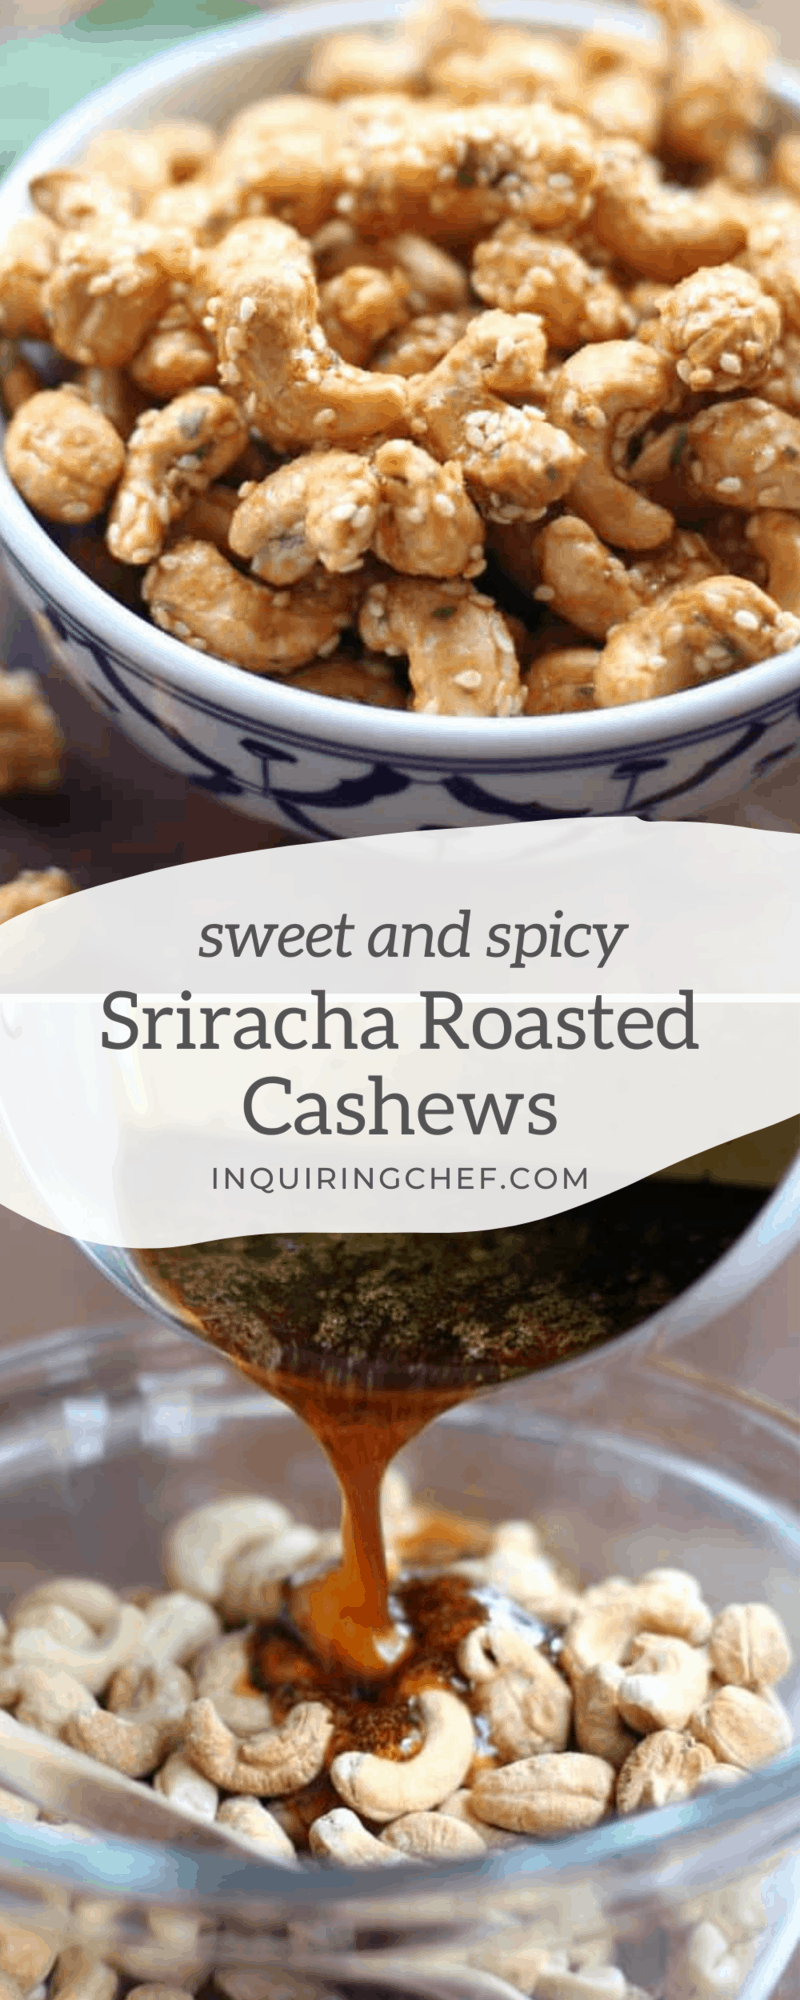 sriracha roasted cashews